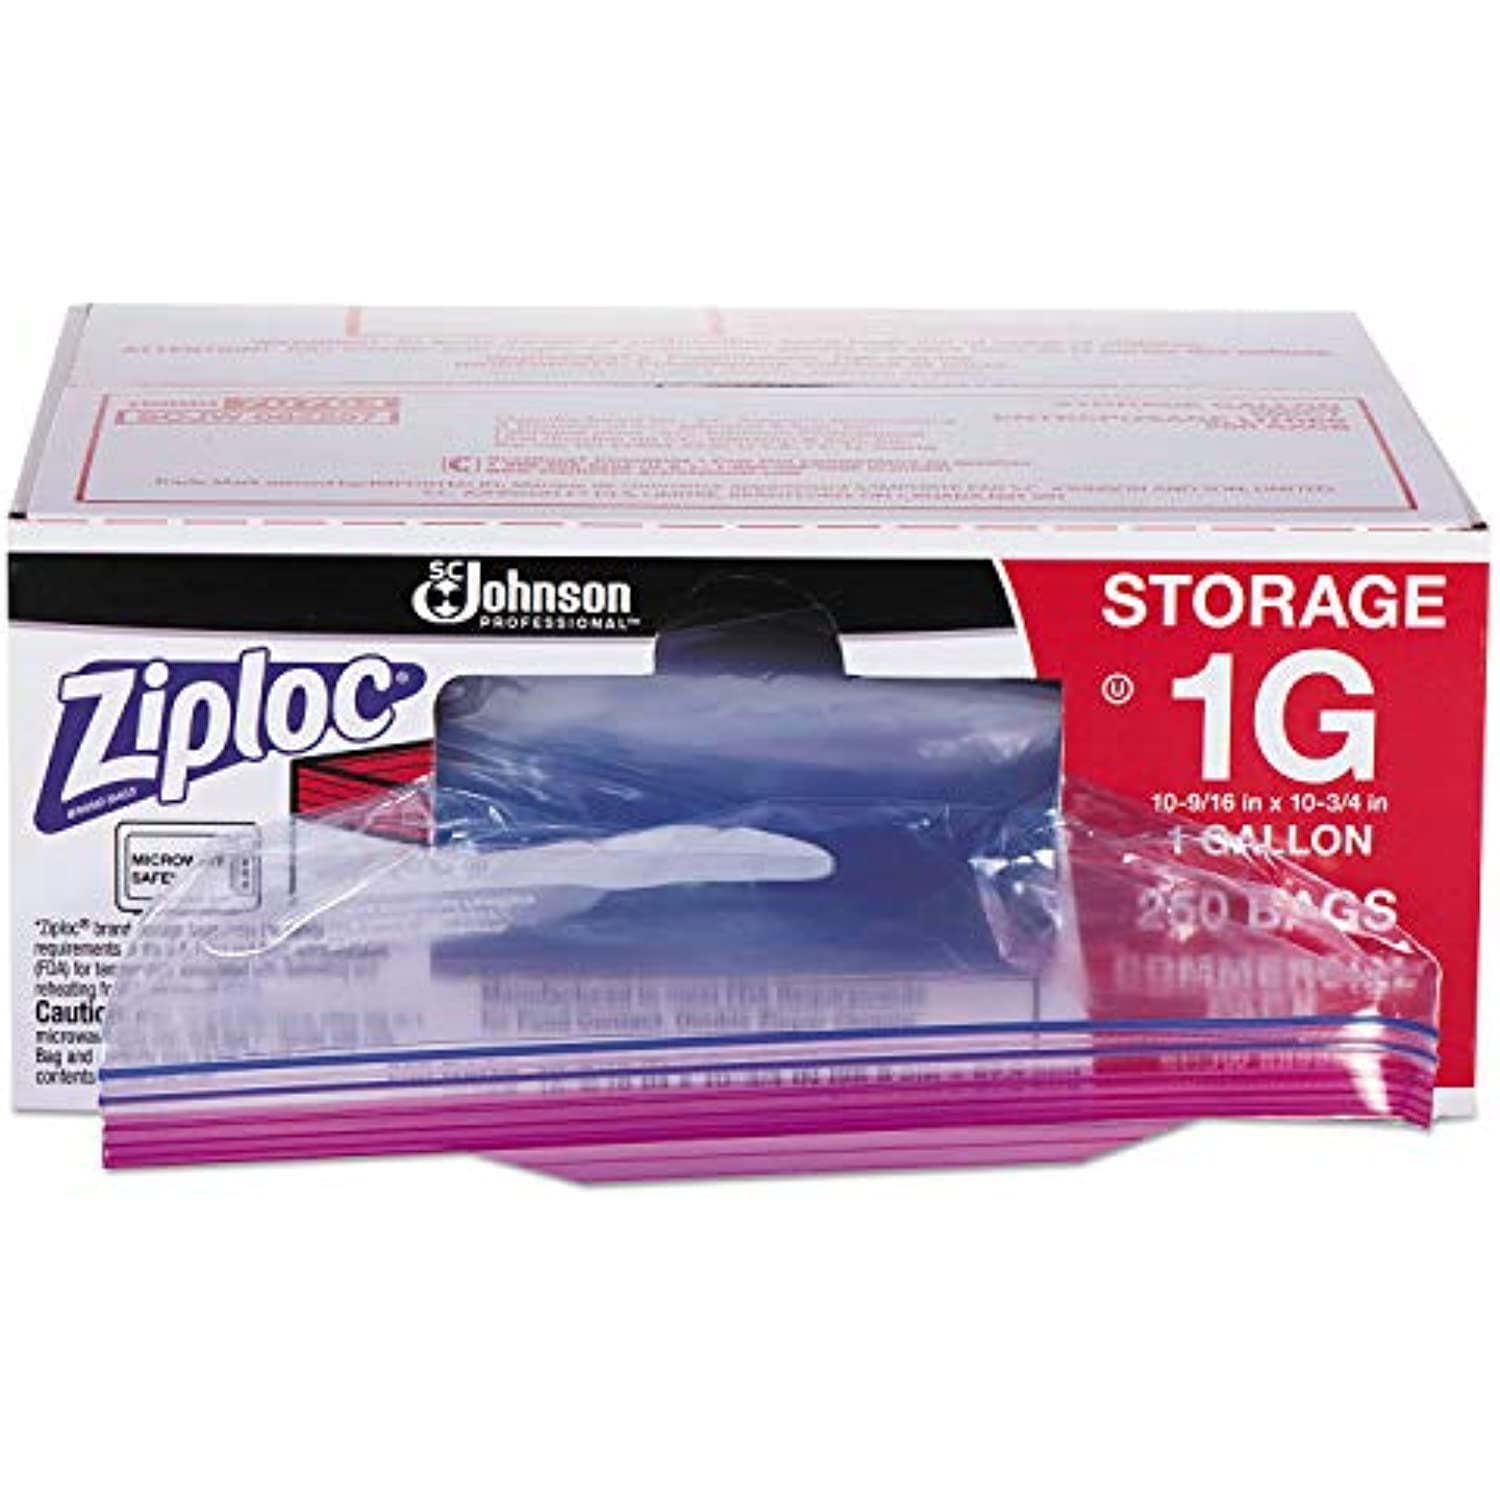 Ziploc Storage Bags Delivery & Pickup